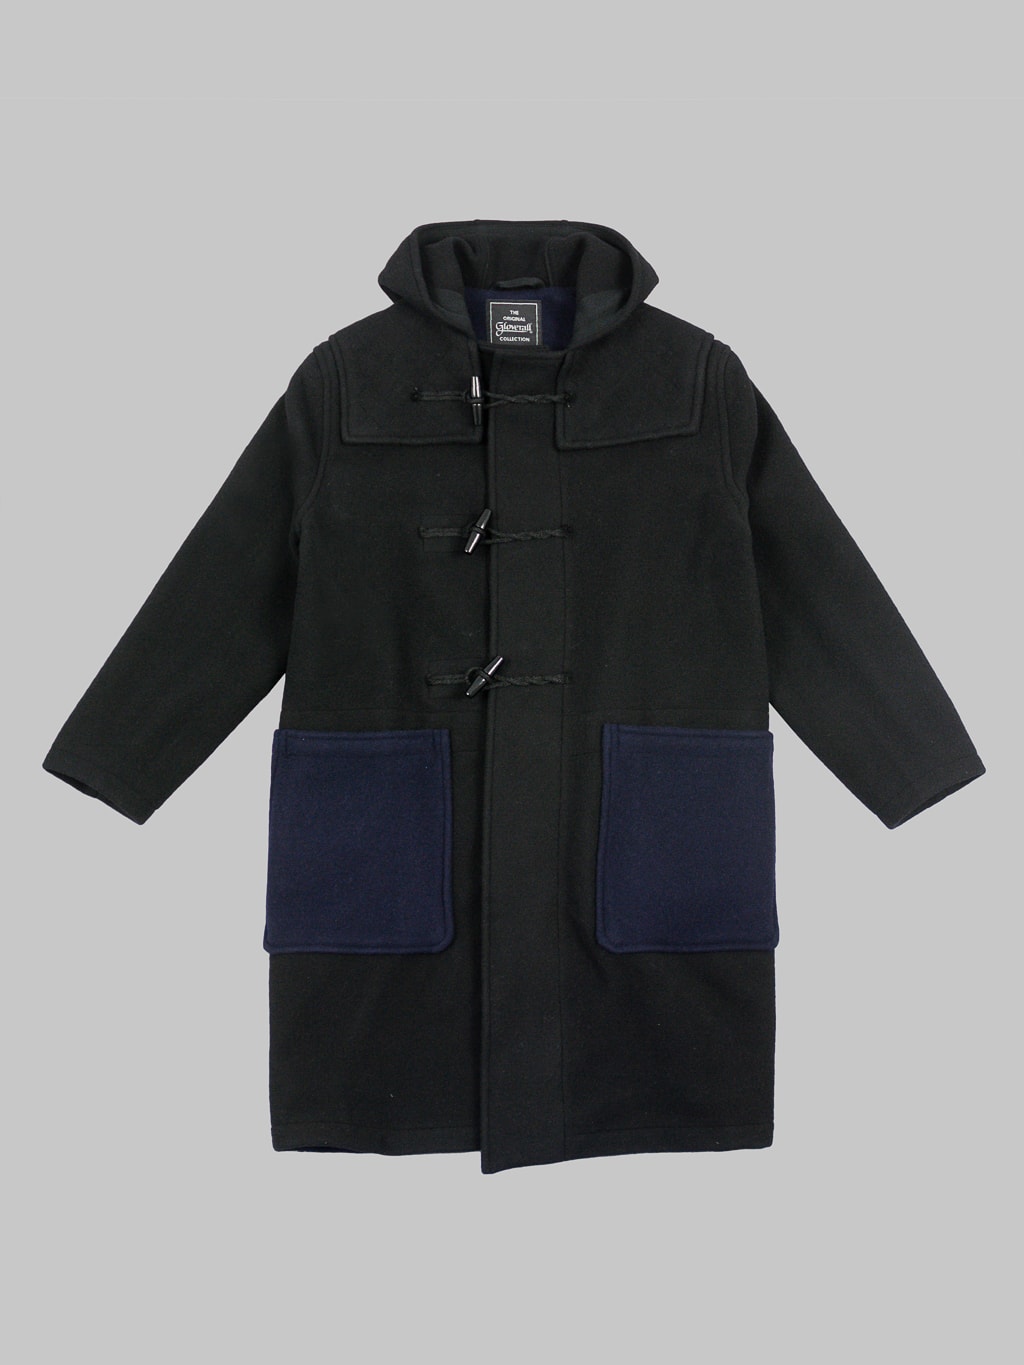 3sixteen x Gloverall Monty Duffle Coat black navy wool fabric front